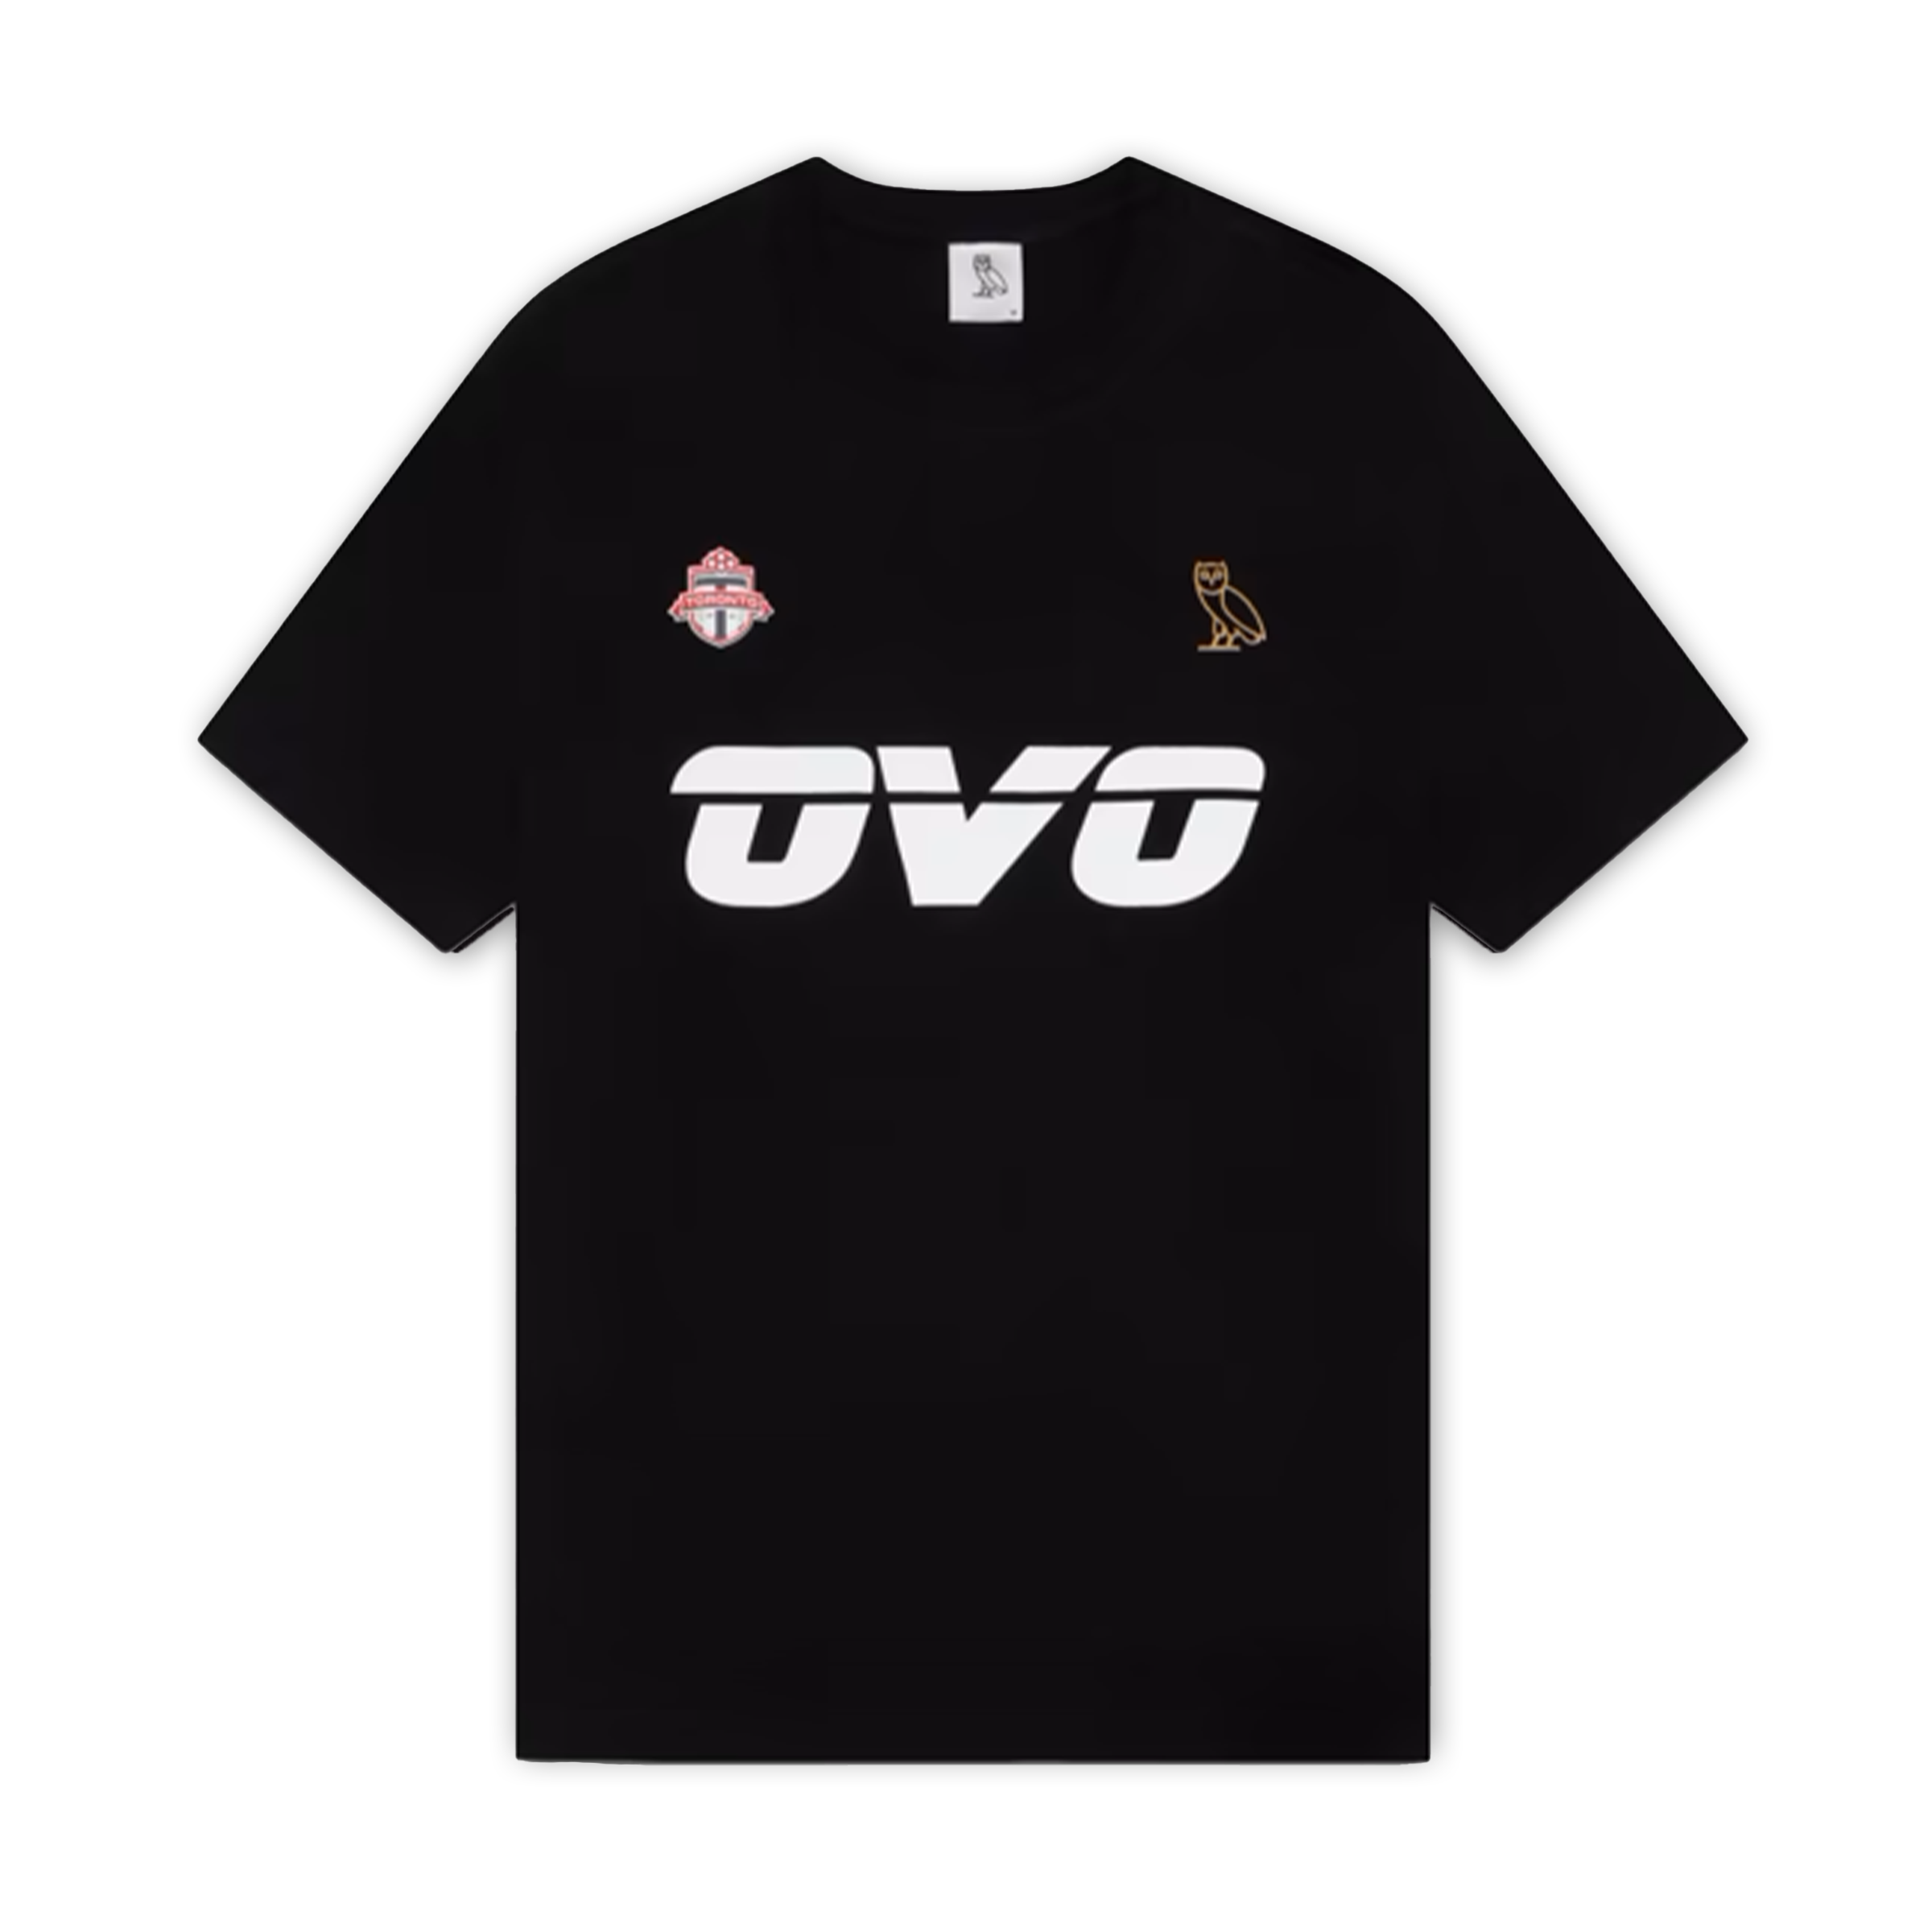 OVO "Toronto FC Team" - T Shirt